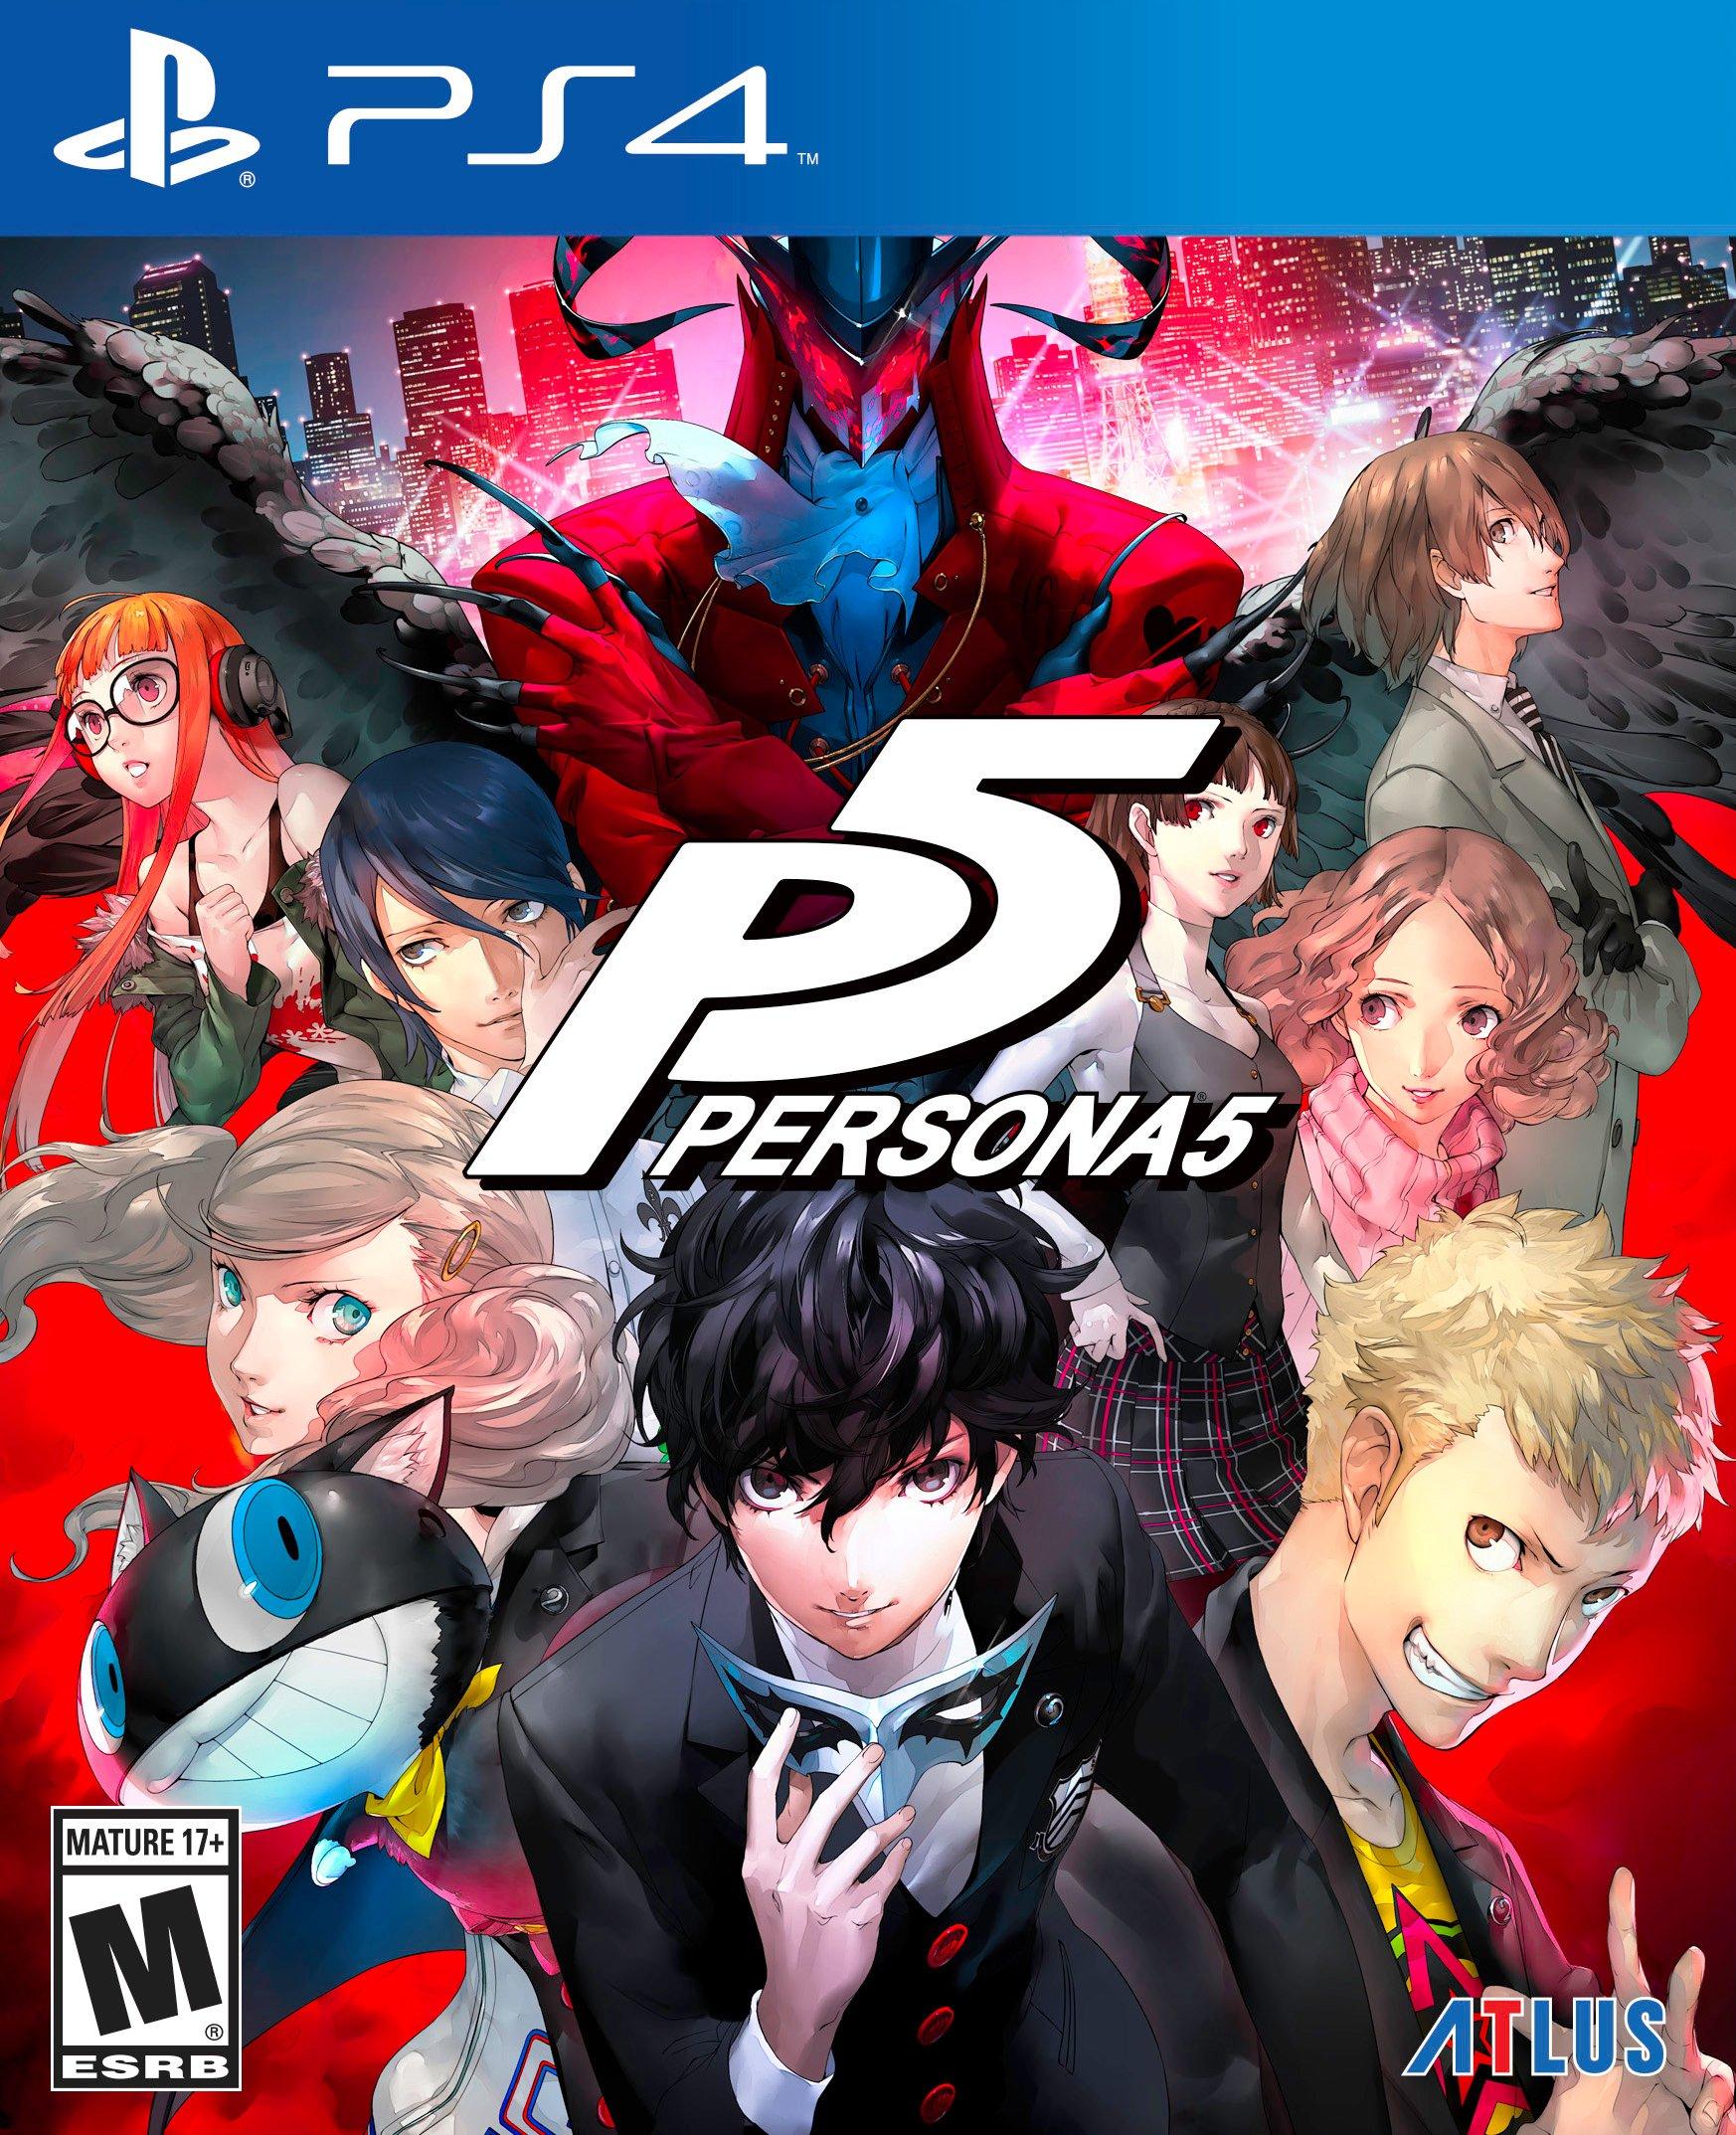 synder gas kost Persona 5 - PlayStation 4 | PlayStation 4 | GameStop